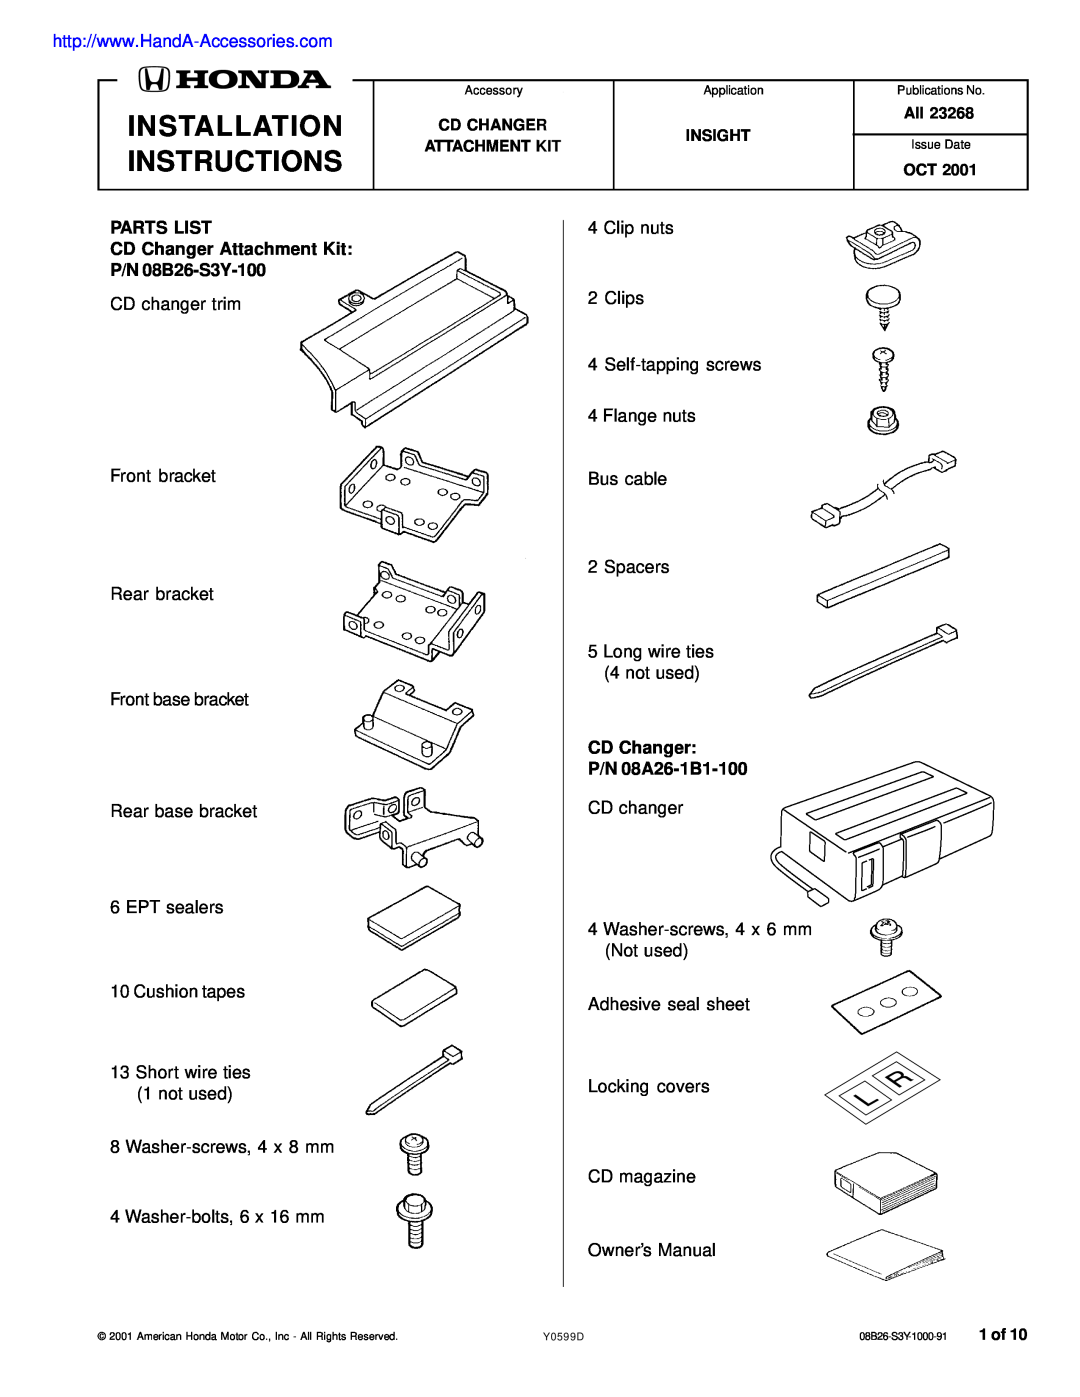 Honda Power Equipment installation instructions Parts List, CD Changer Attachment Kit P/N 08B26-S3Y-100, Installation 